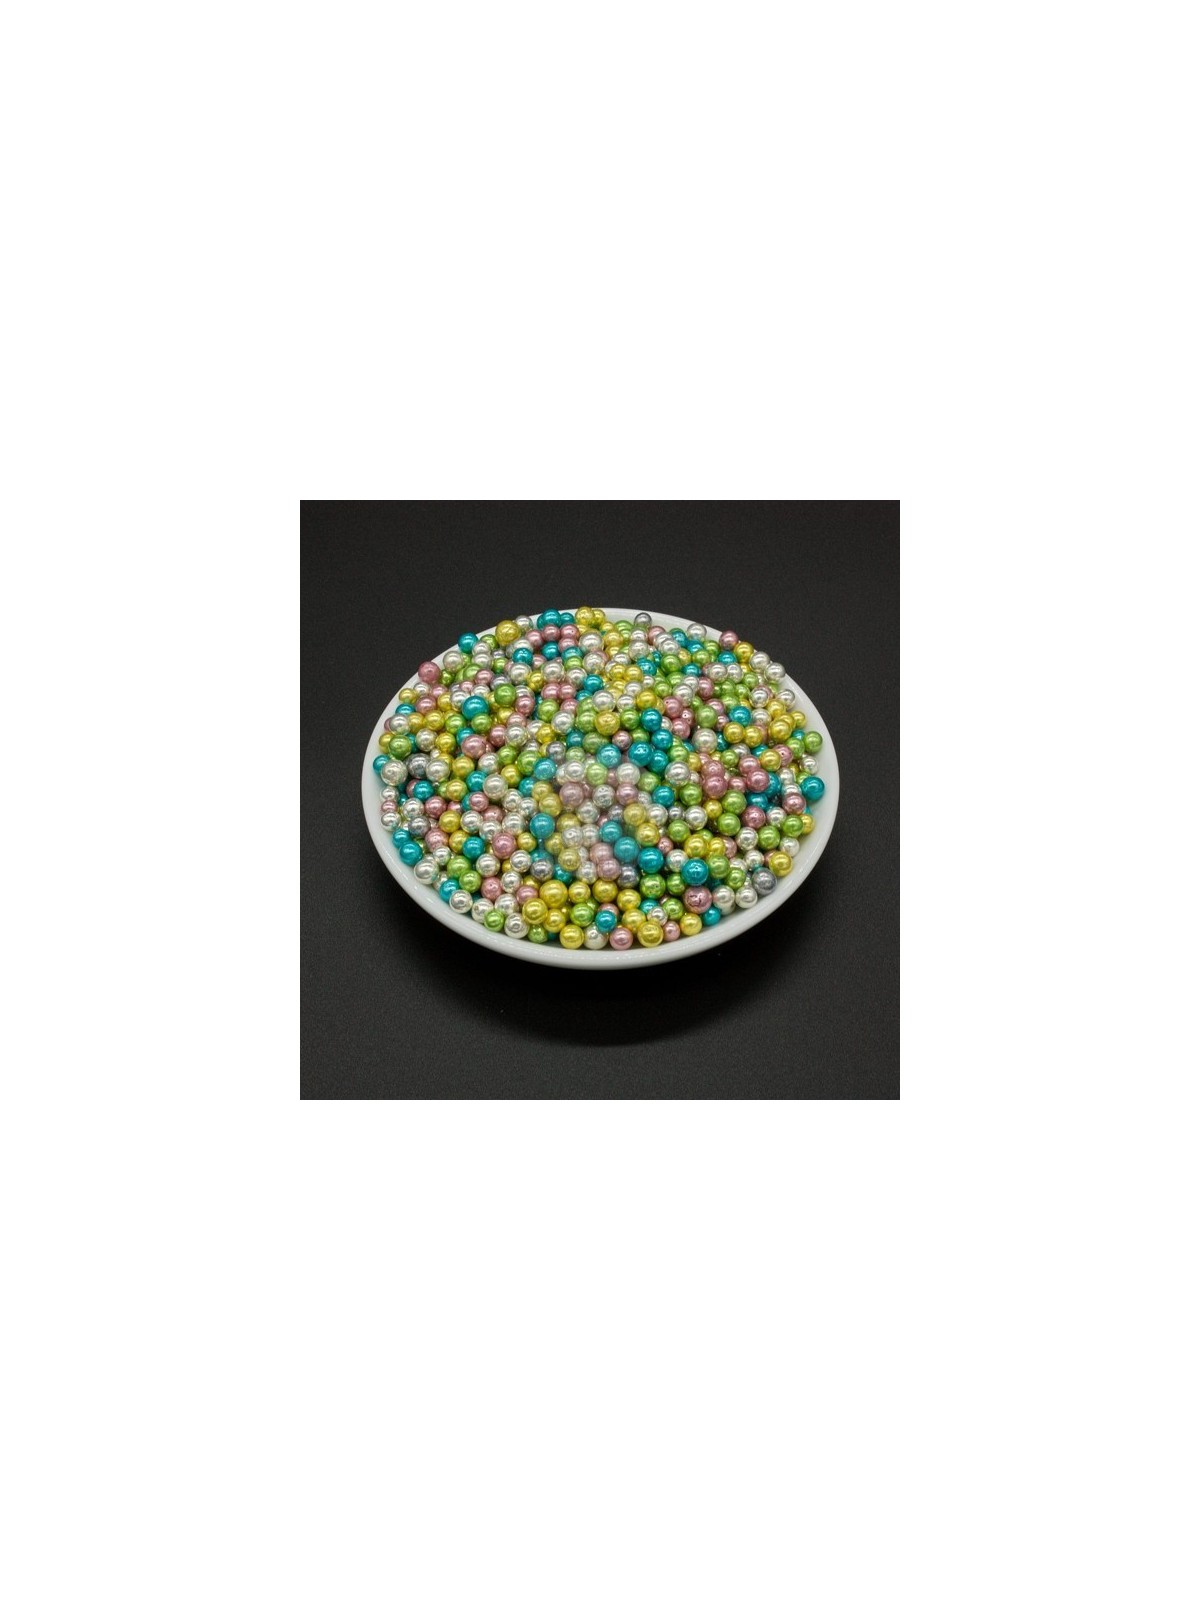 Zuckerperlen 3-4 mm - Regenbogenfarben - 100g